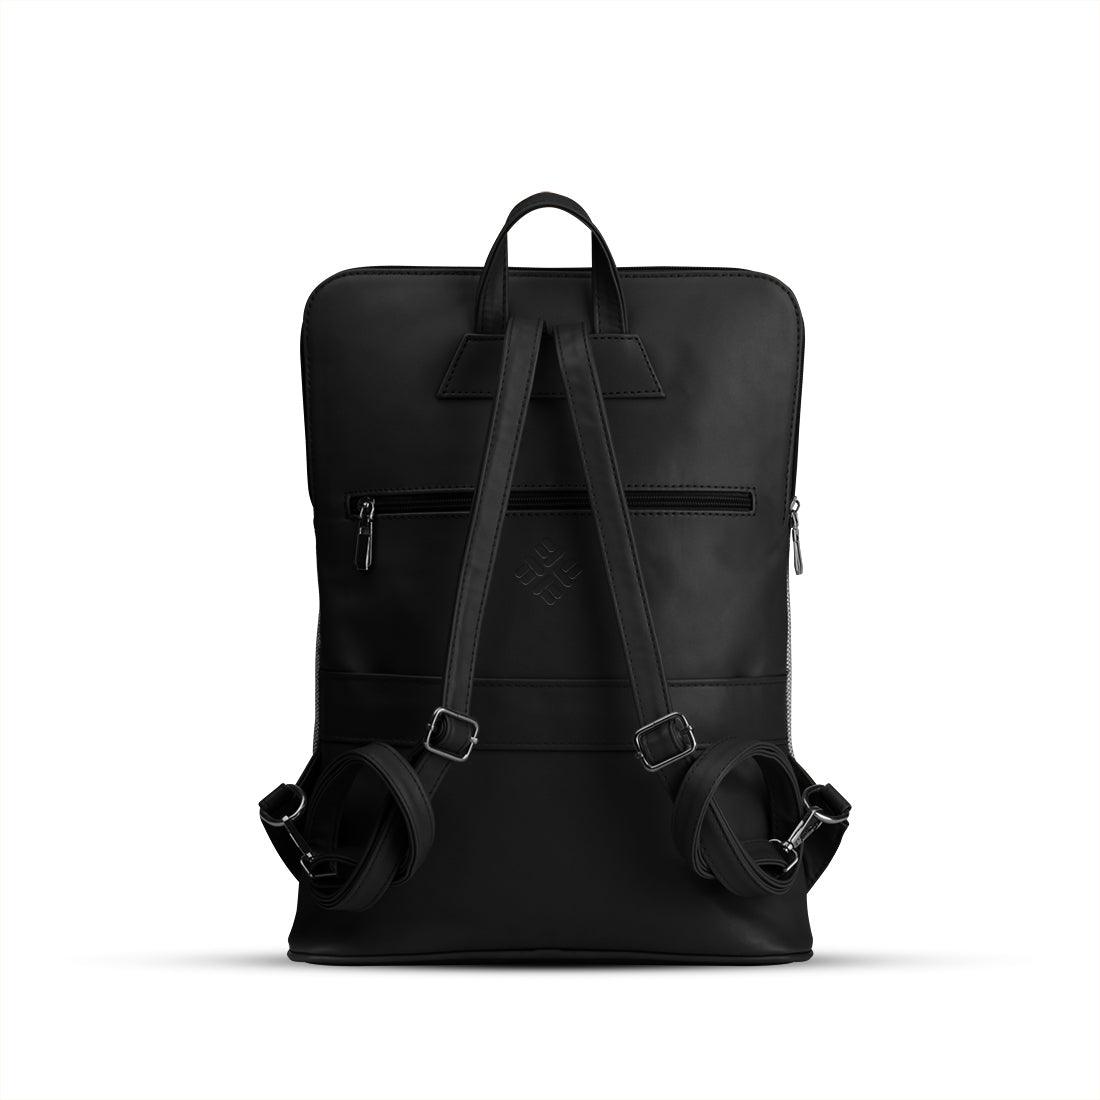 Black Orbit Laptop Backpack Dog Hoodie - CANVAEGYPT